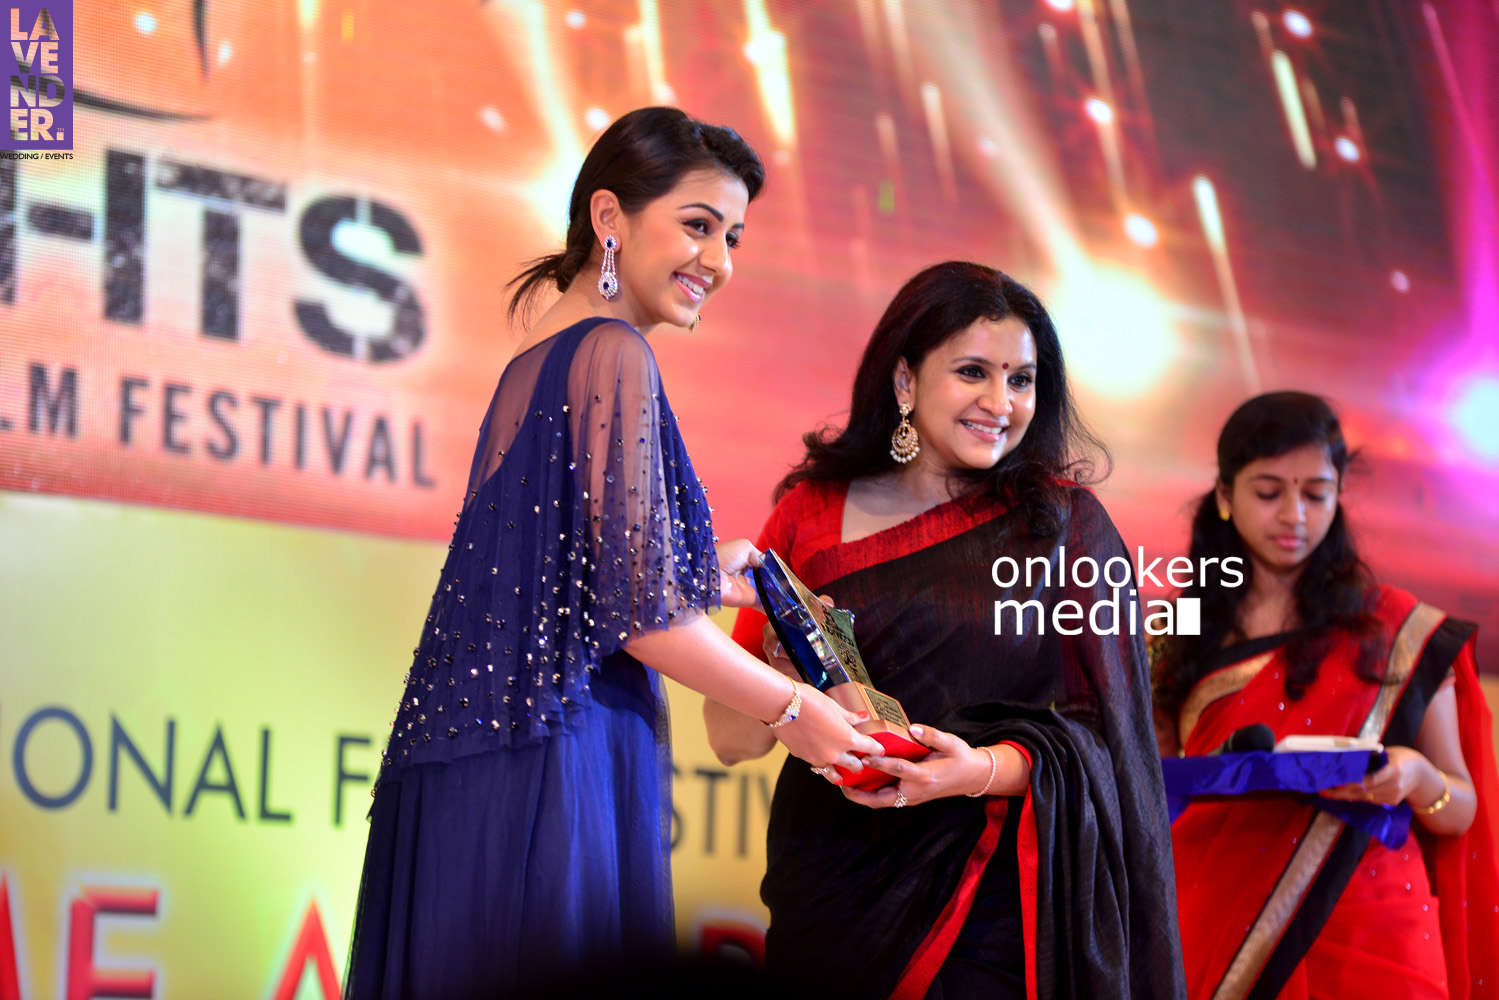 All Lights India International Film Festival